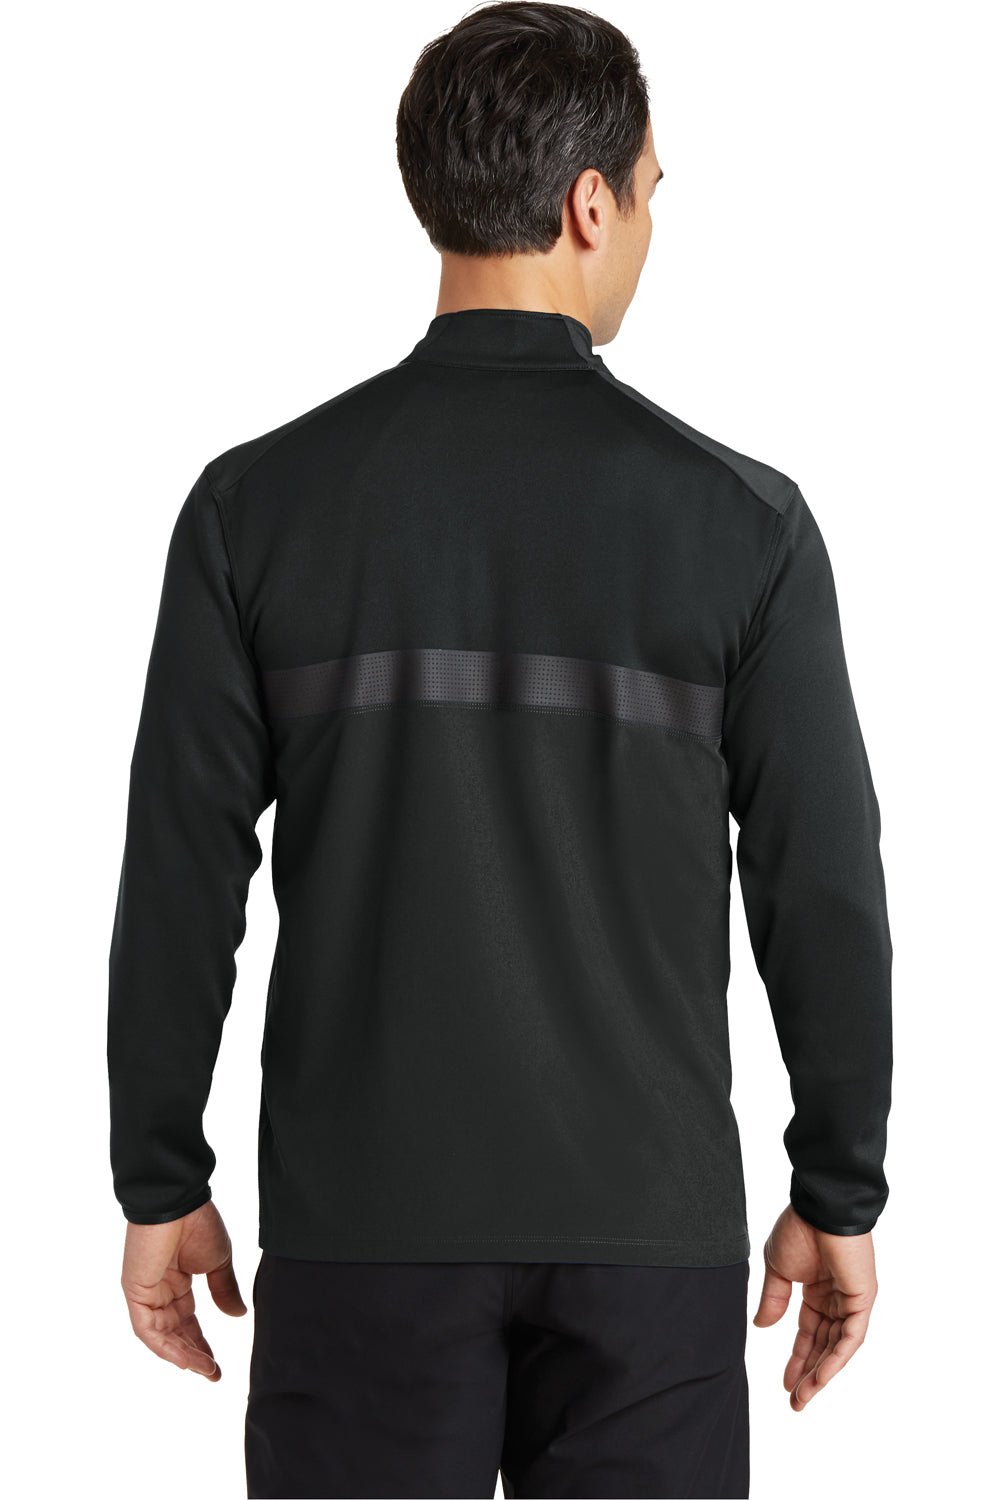 Nike 746102 Mens Dri-Fit Moisture Wicking 1/4 Zip Sweatshirt Black Model Back